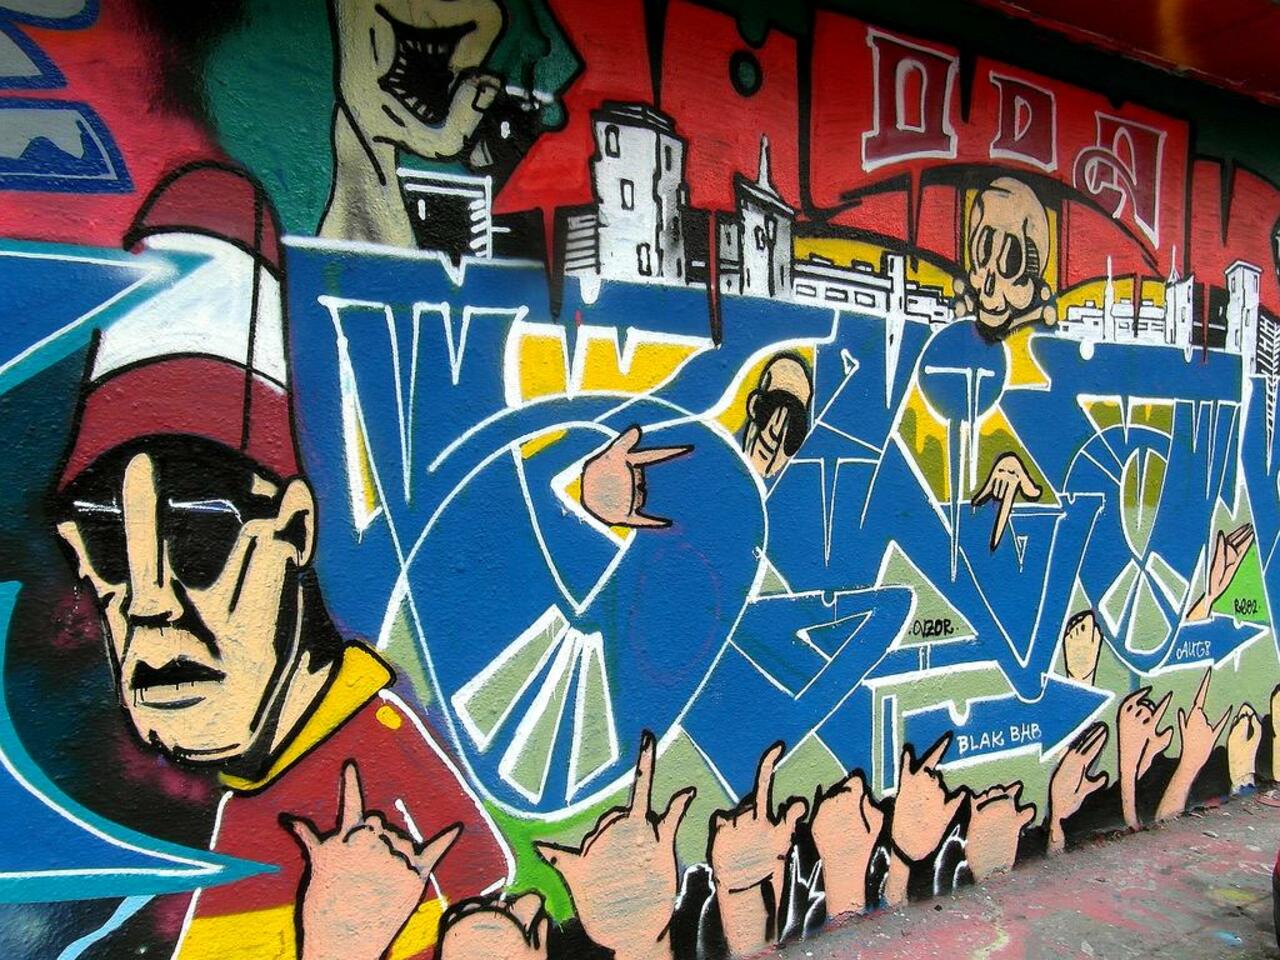 Street Art by anonymous in #Prague http://www.urbacolors.com #art #mural #graffiti #streetart http://t.co/z3zAAhTEwP